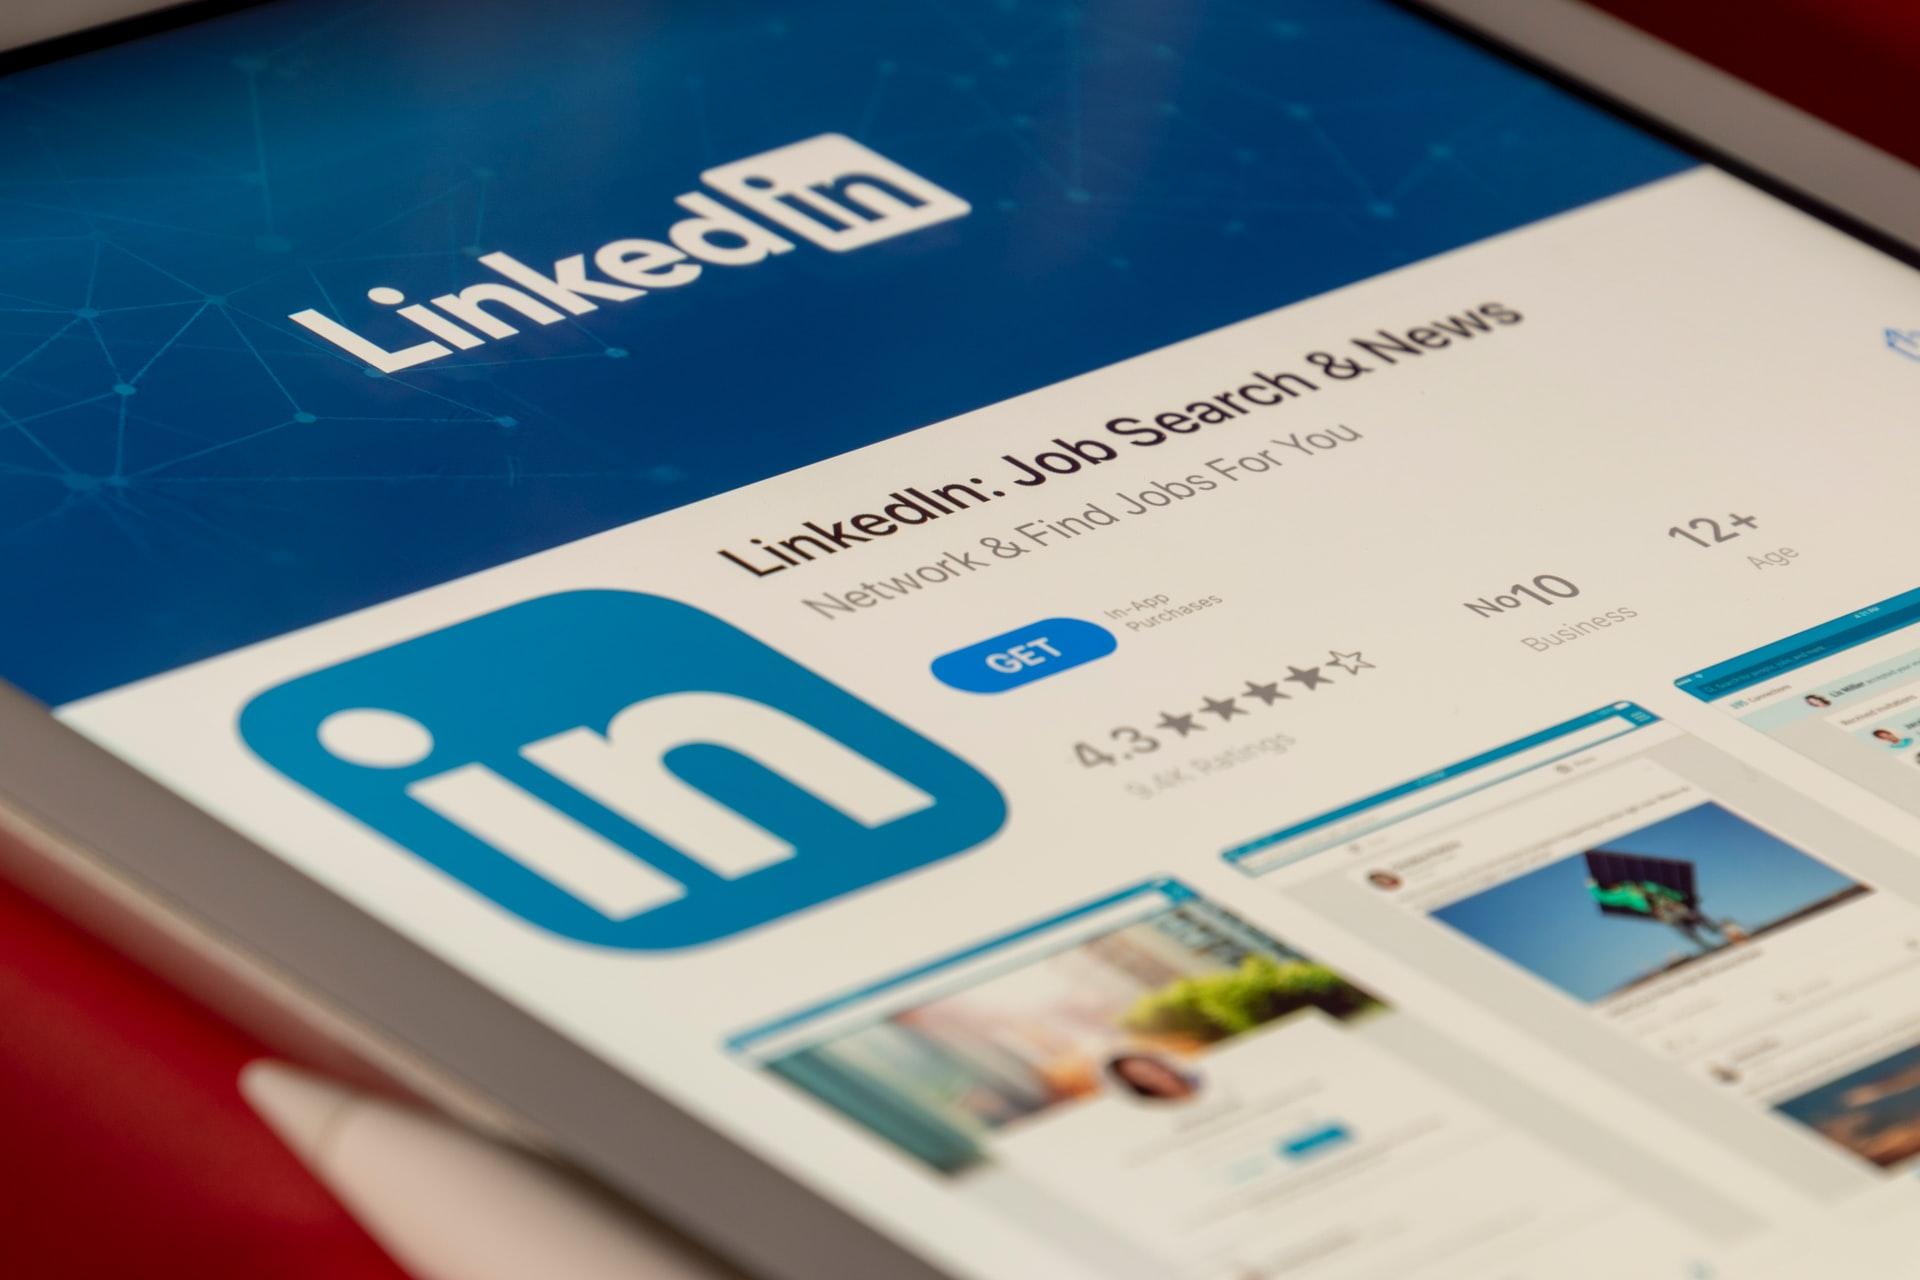 Learn how to use LinkedIn